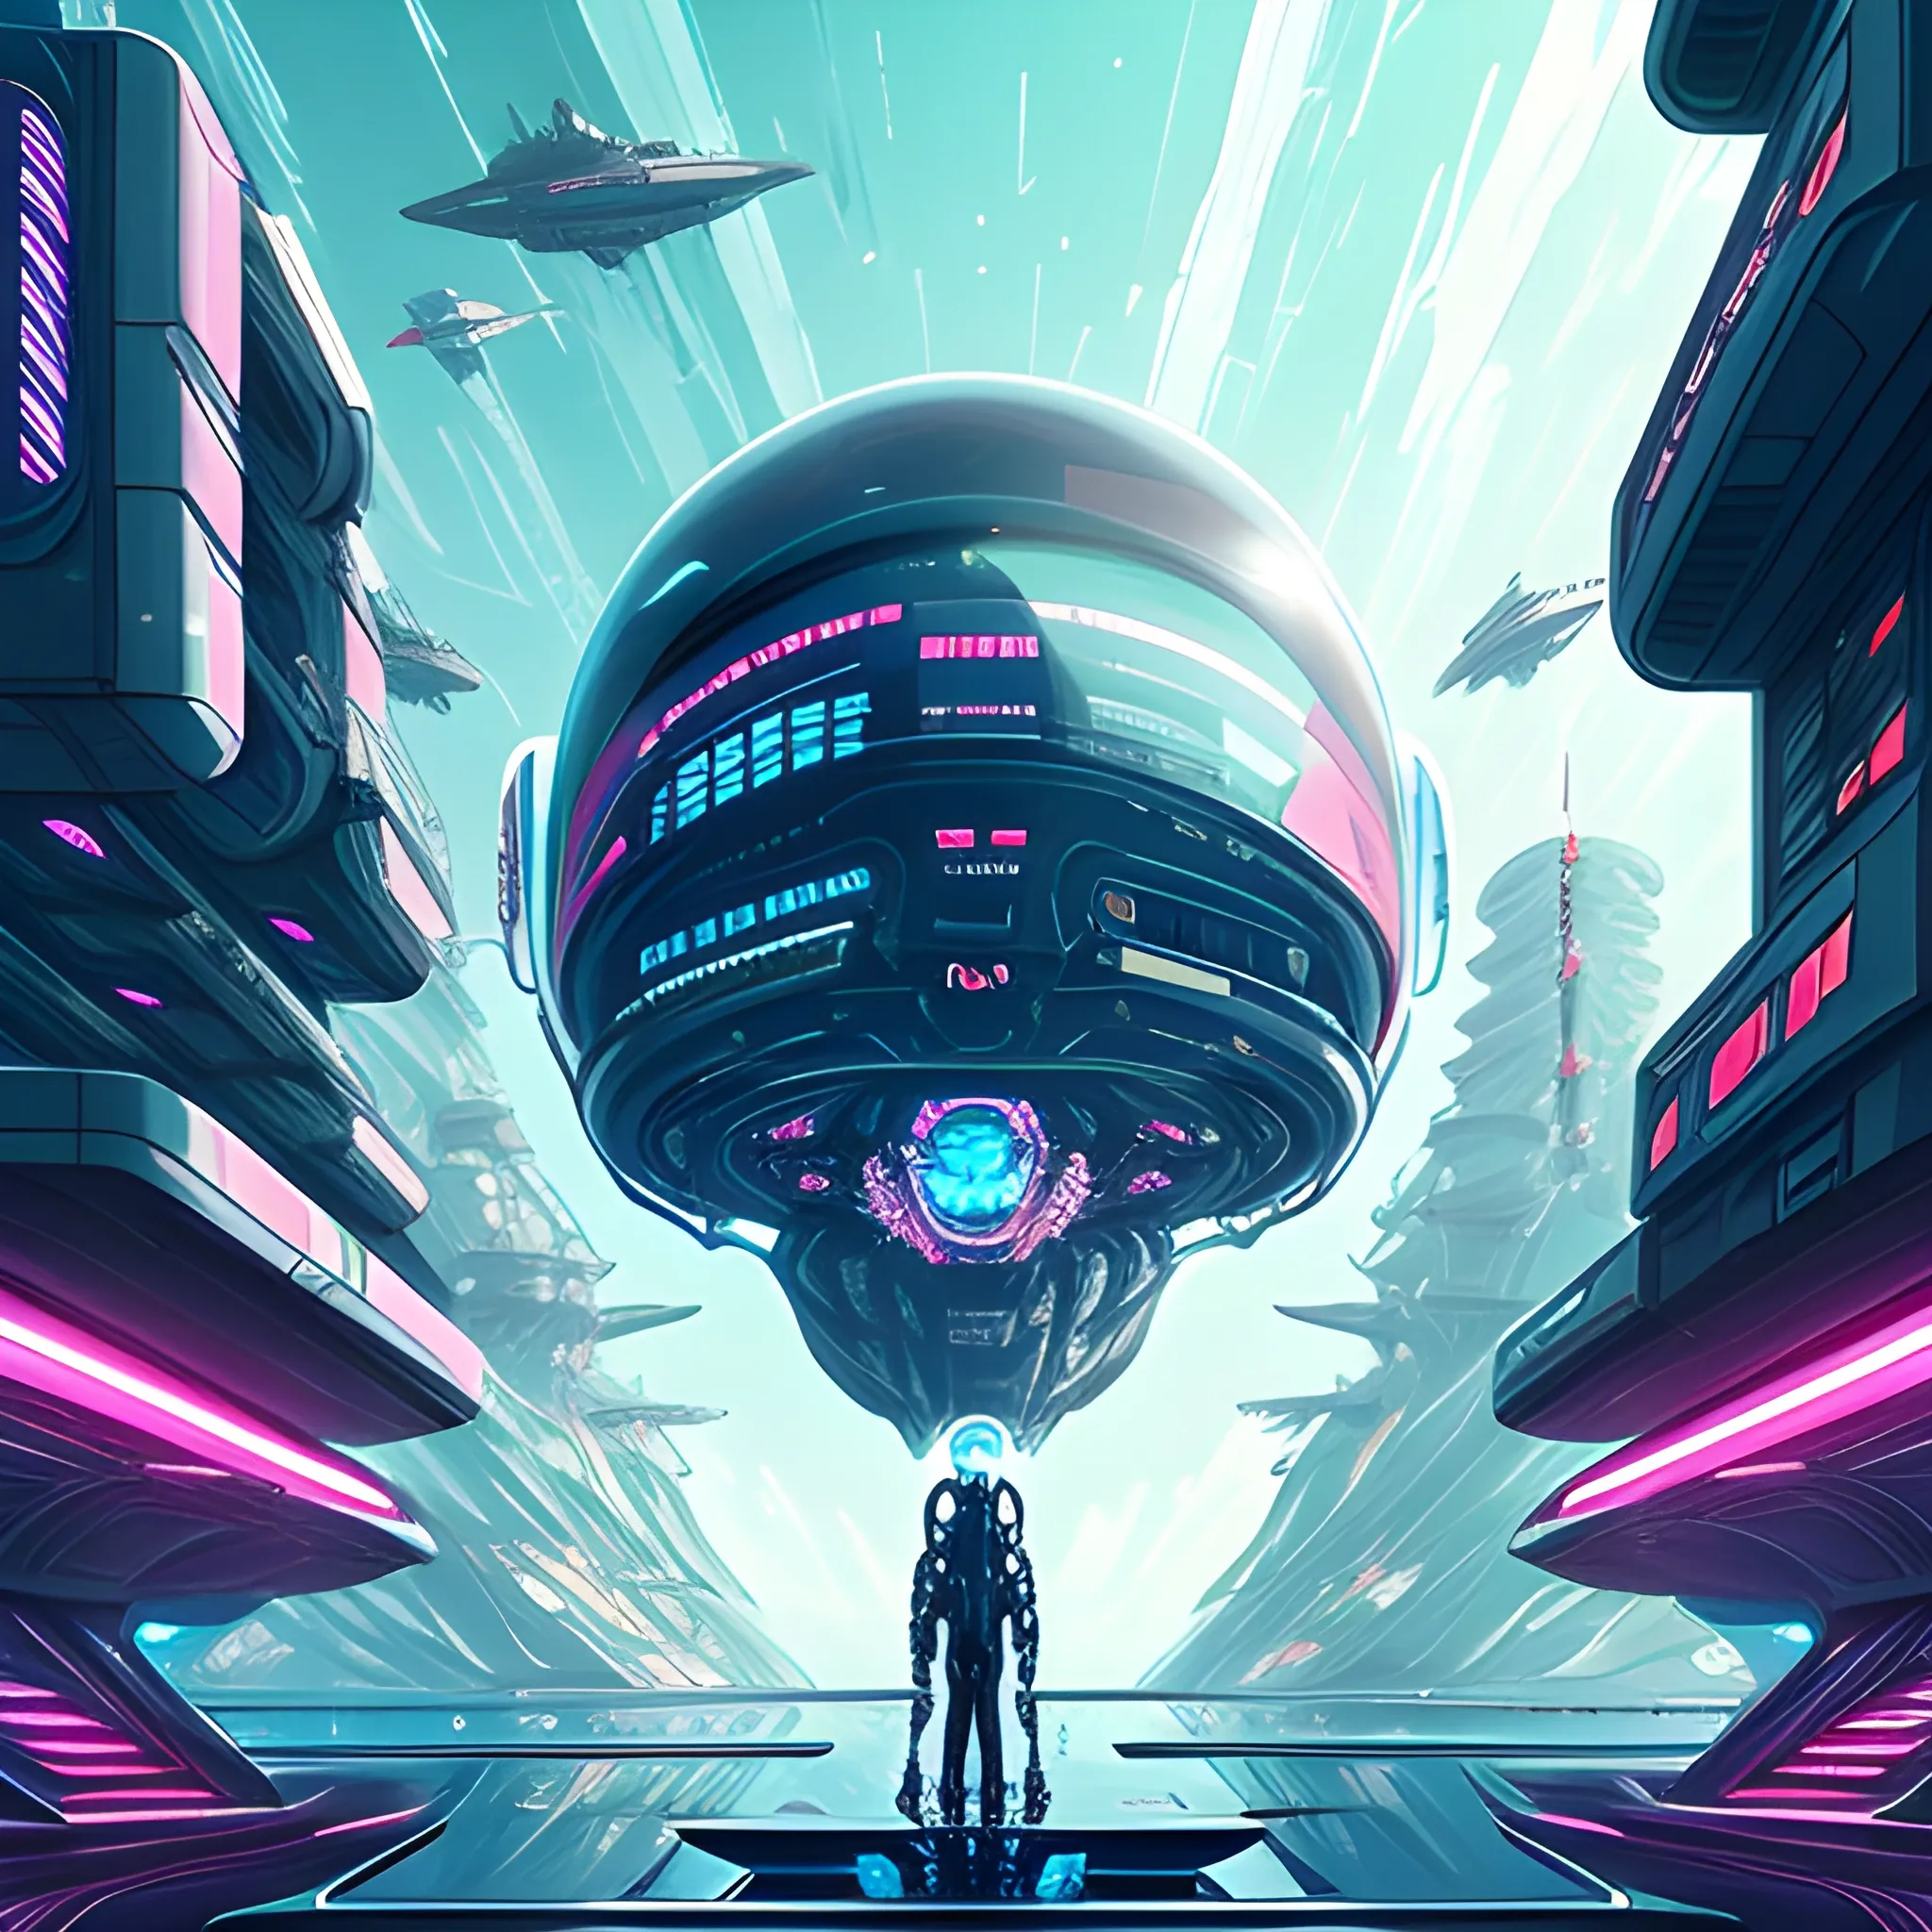 Anime art style, futuristic, cinematic, high tech human science fiction city on an ocean planet, cyberpunk, enormous Glass helmet, very detailed